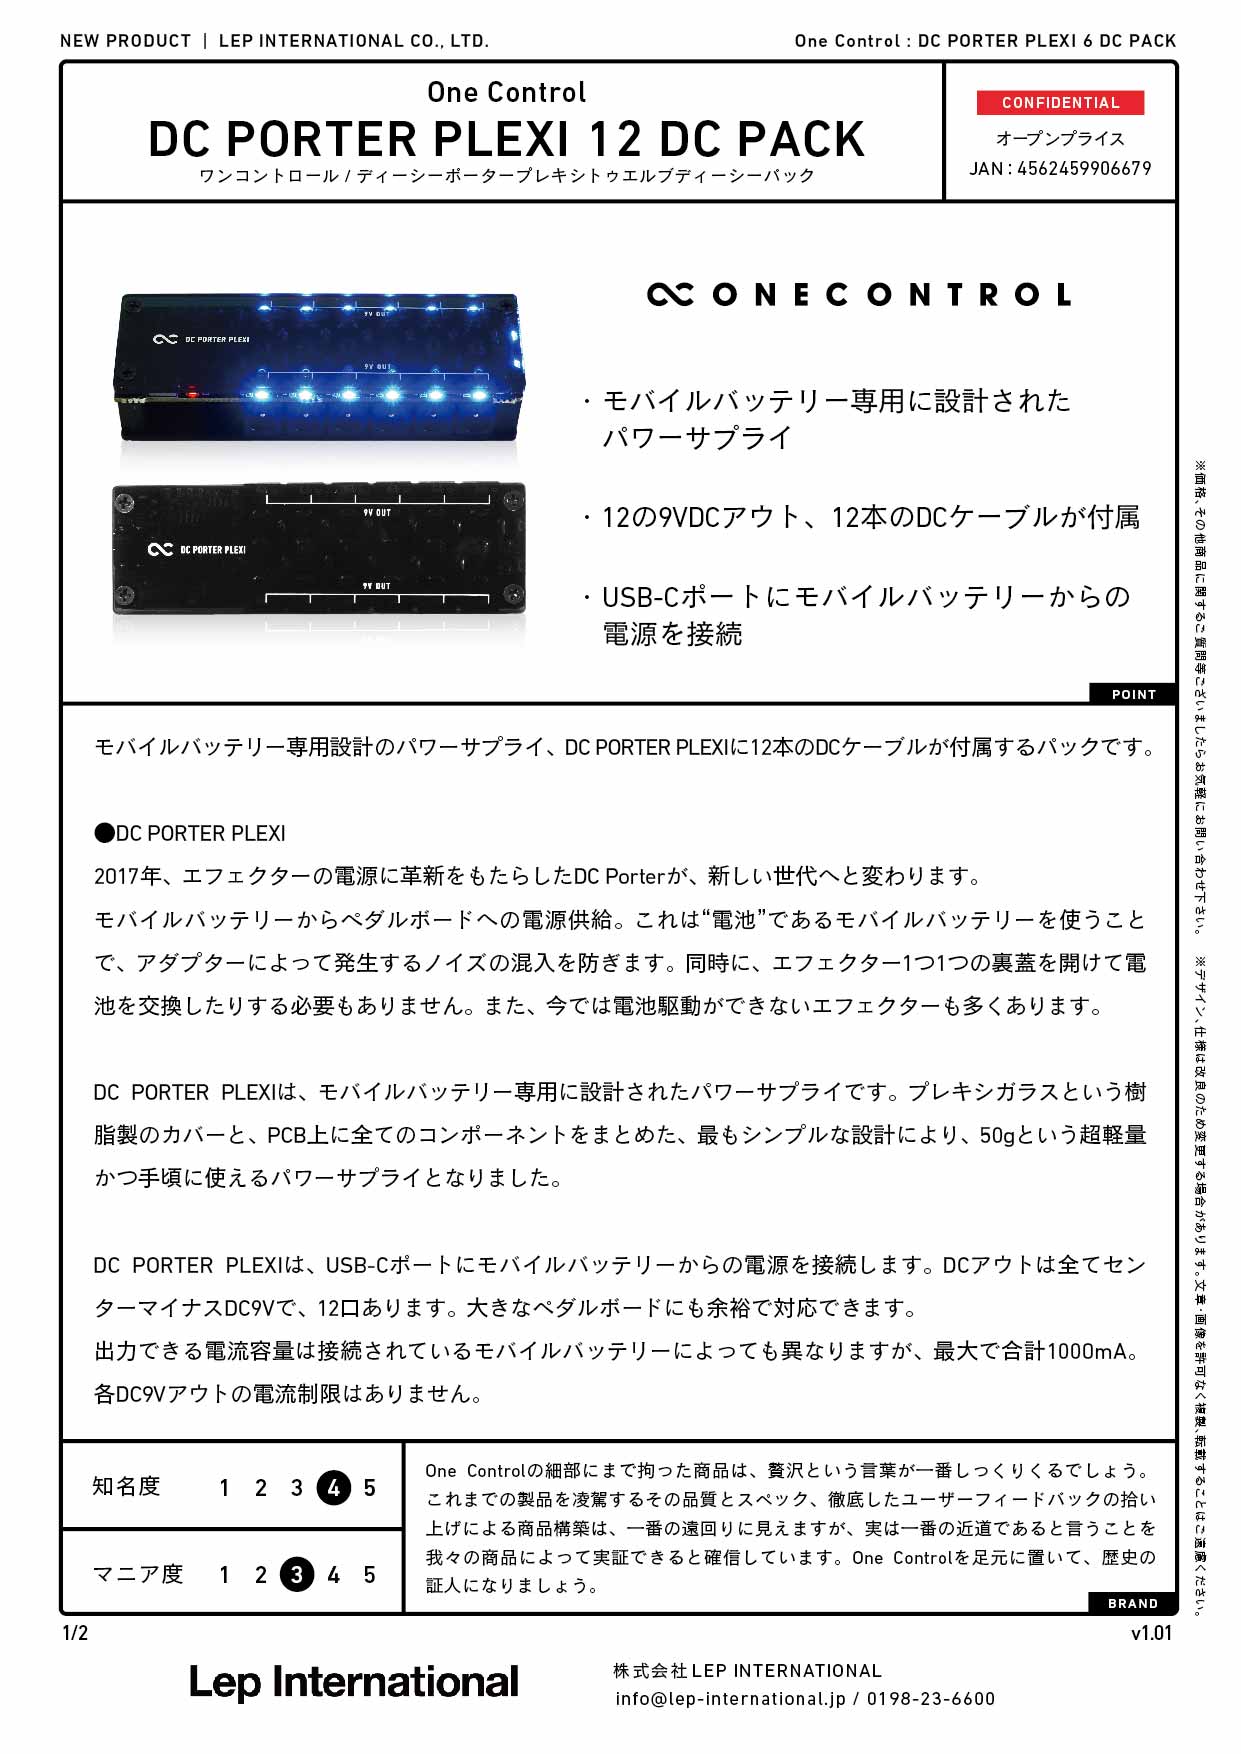 One Control / DC PORTER PLEXI